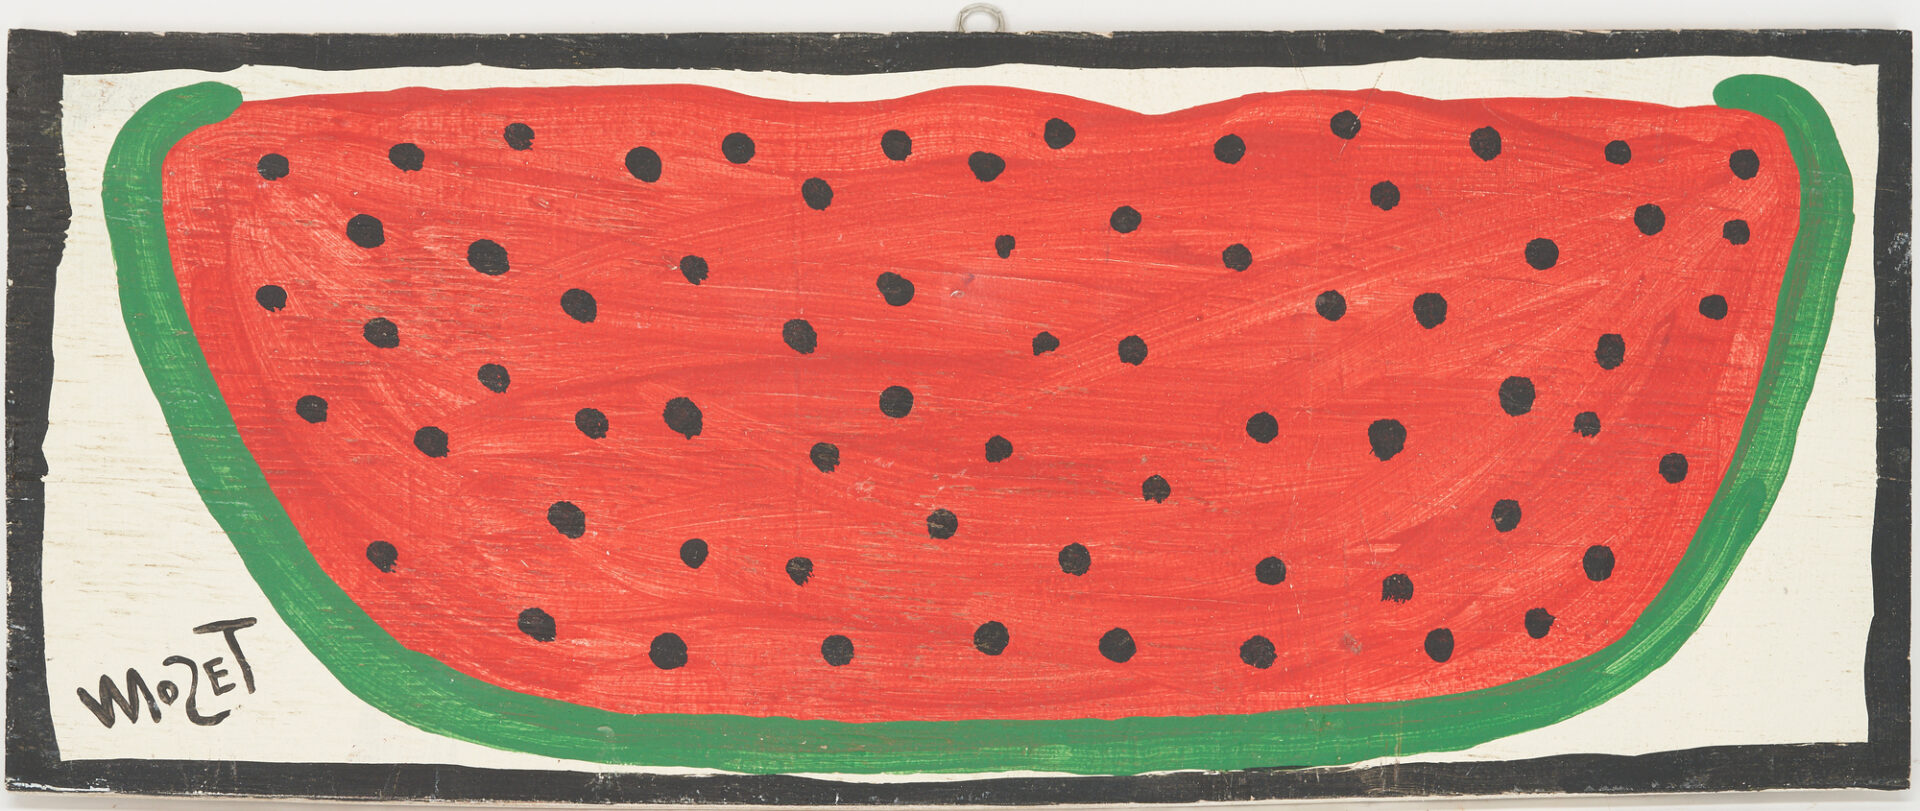 Lot 169: 2 Mose Tolliver Folk Art Paintings, Big Green Fish & Watermelon